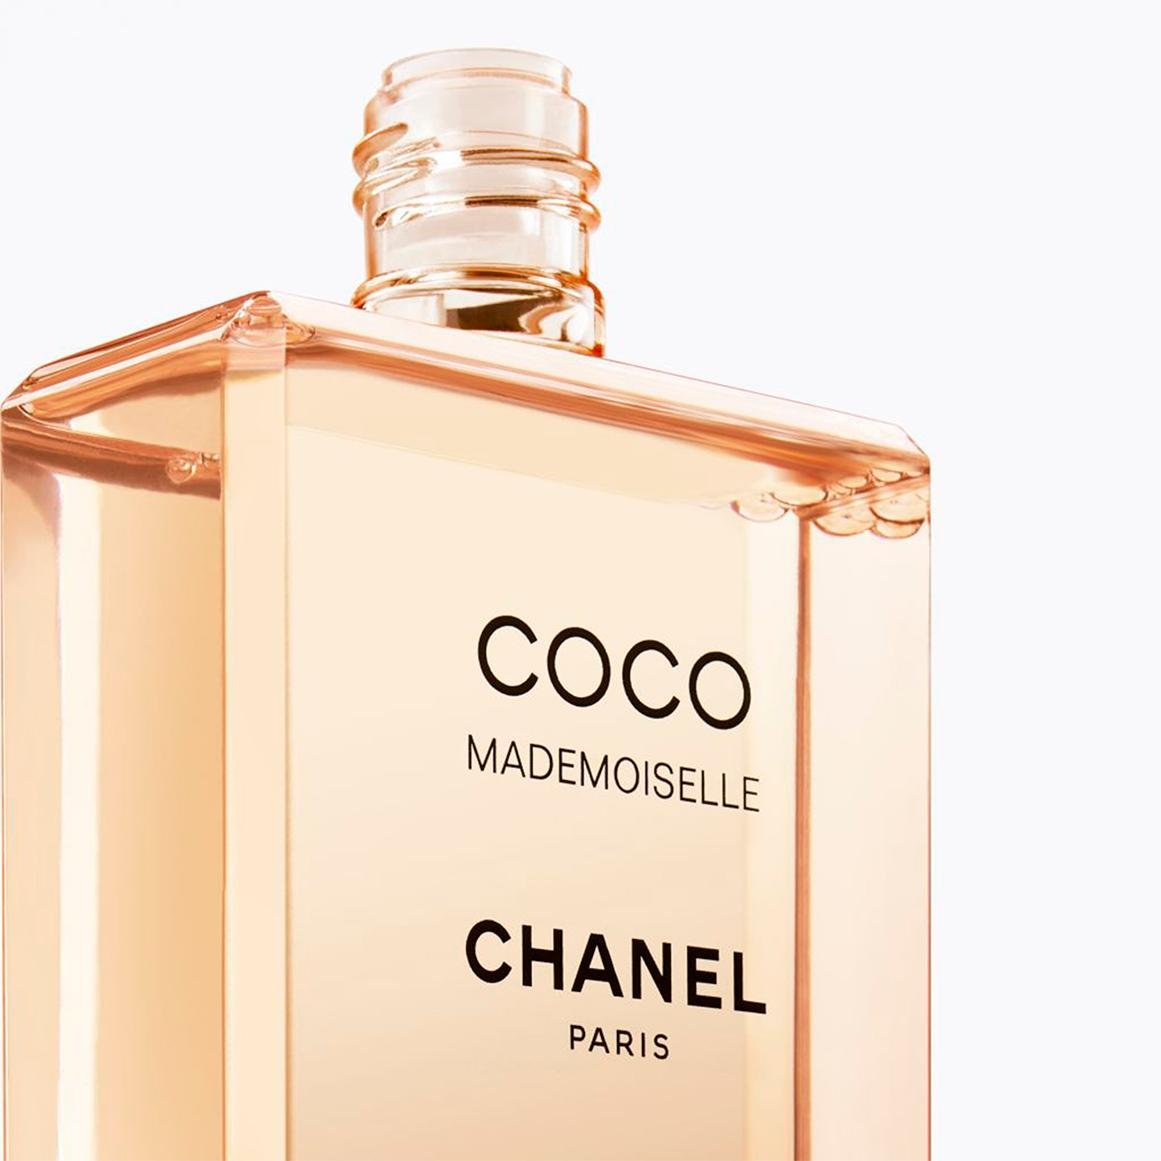 Chanel Coco Mademoiselle Foaming Shower Gel | My Perfume Shop Australia